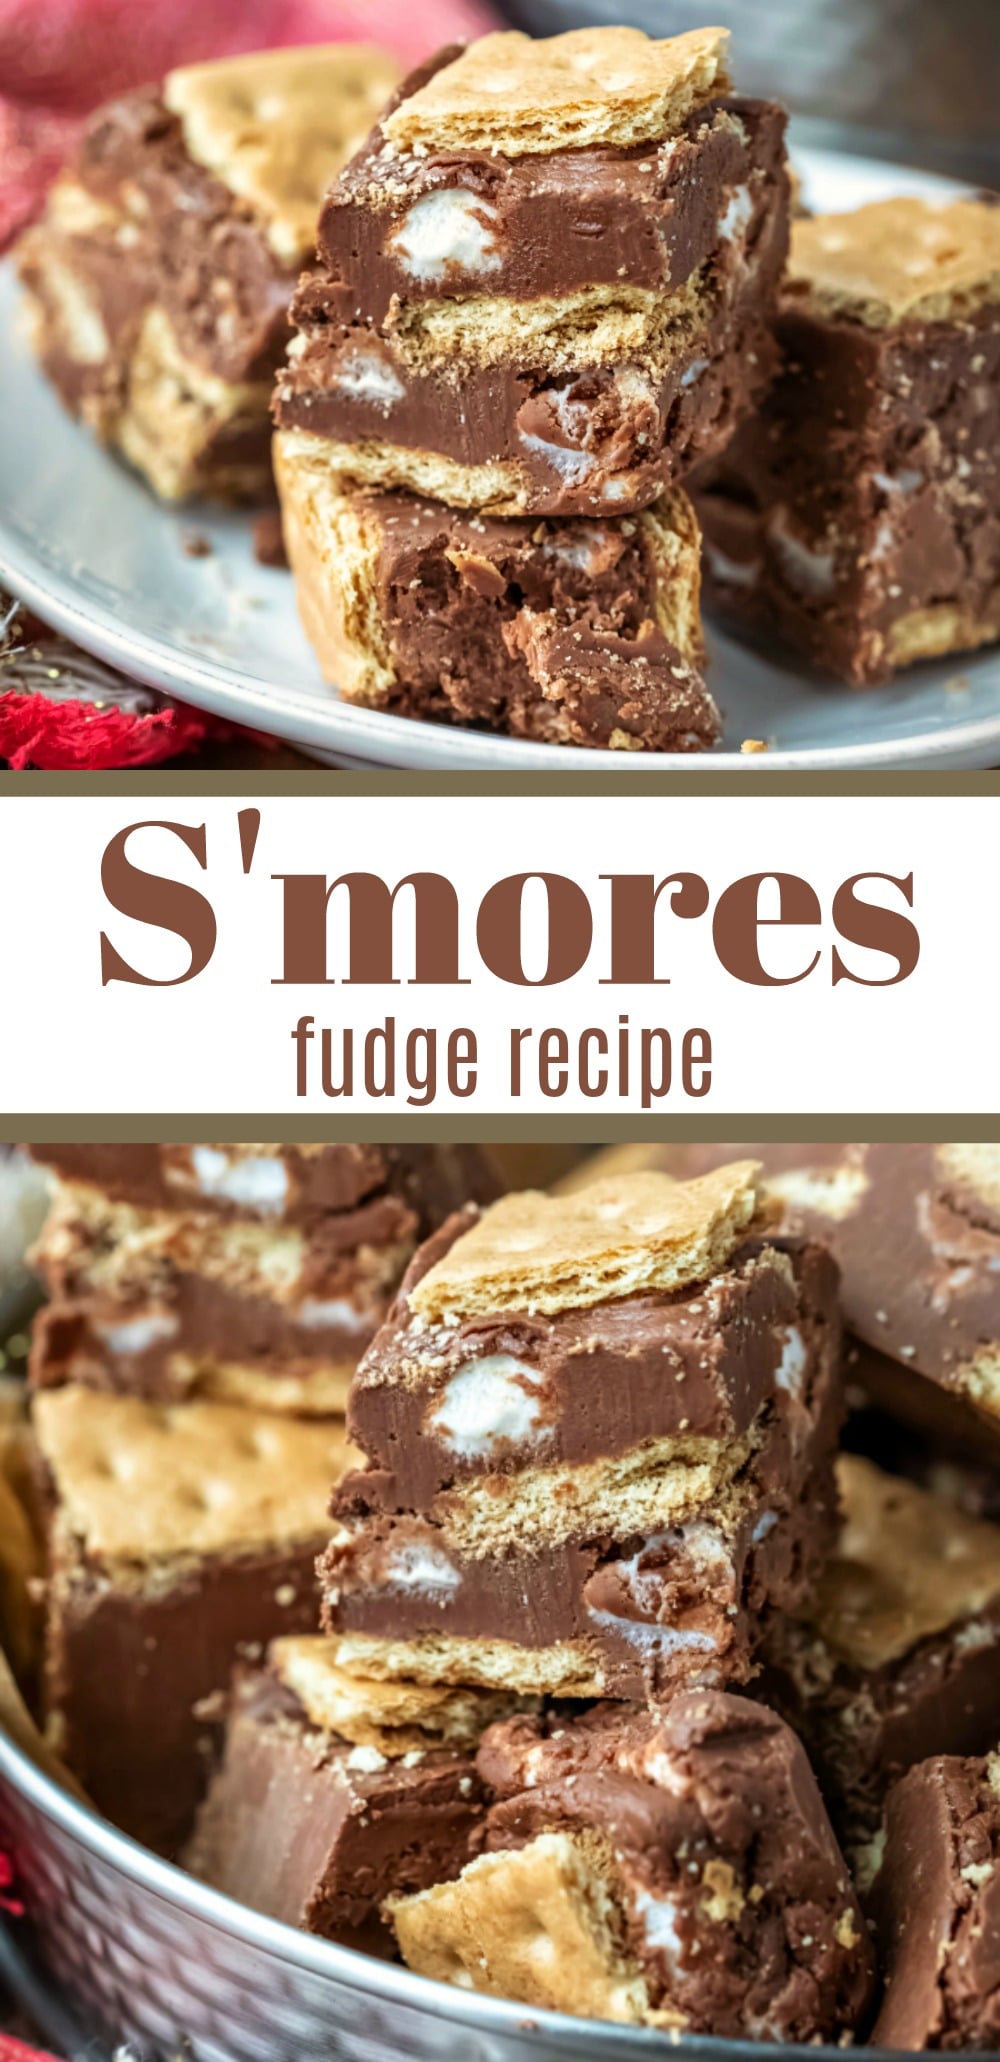 S'mores Fudge - I Heart Eating